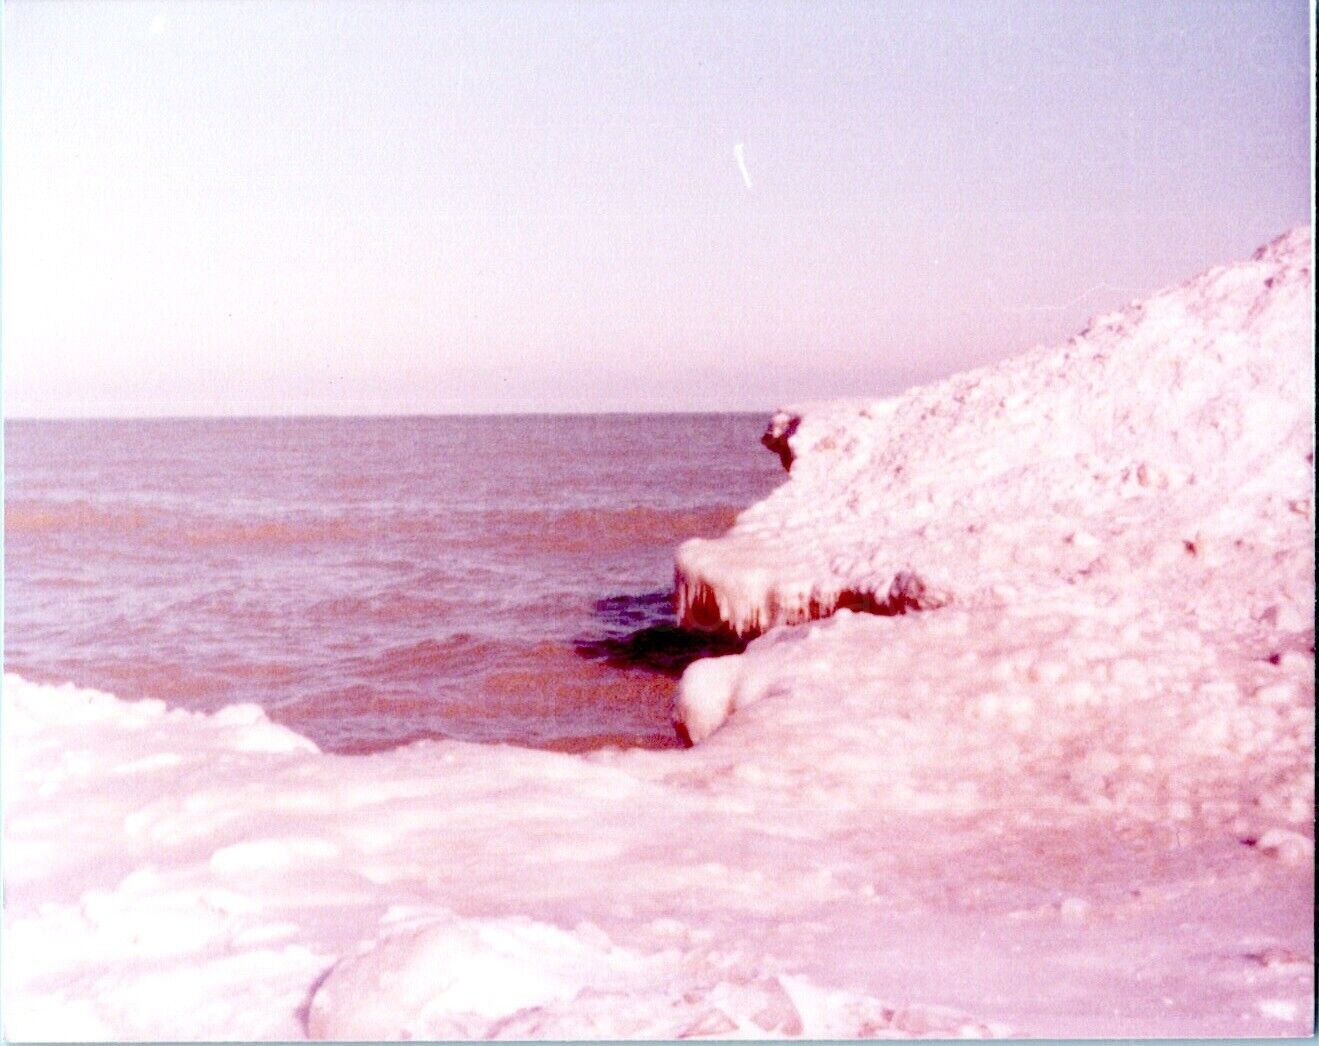 VINTAGE FOUND PHOTO - 1970S - ICE COVERED BEACH OCEAN COASTAL SNOW WINTER SHOT